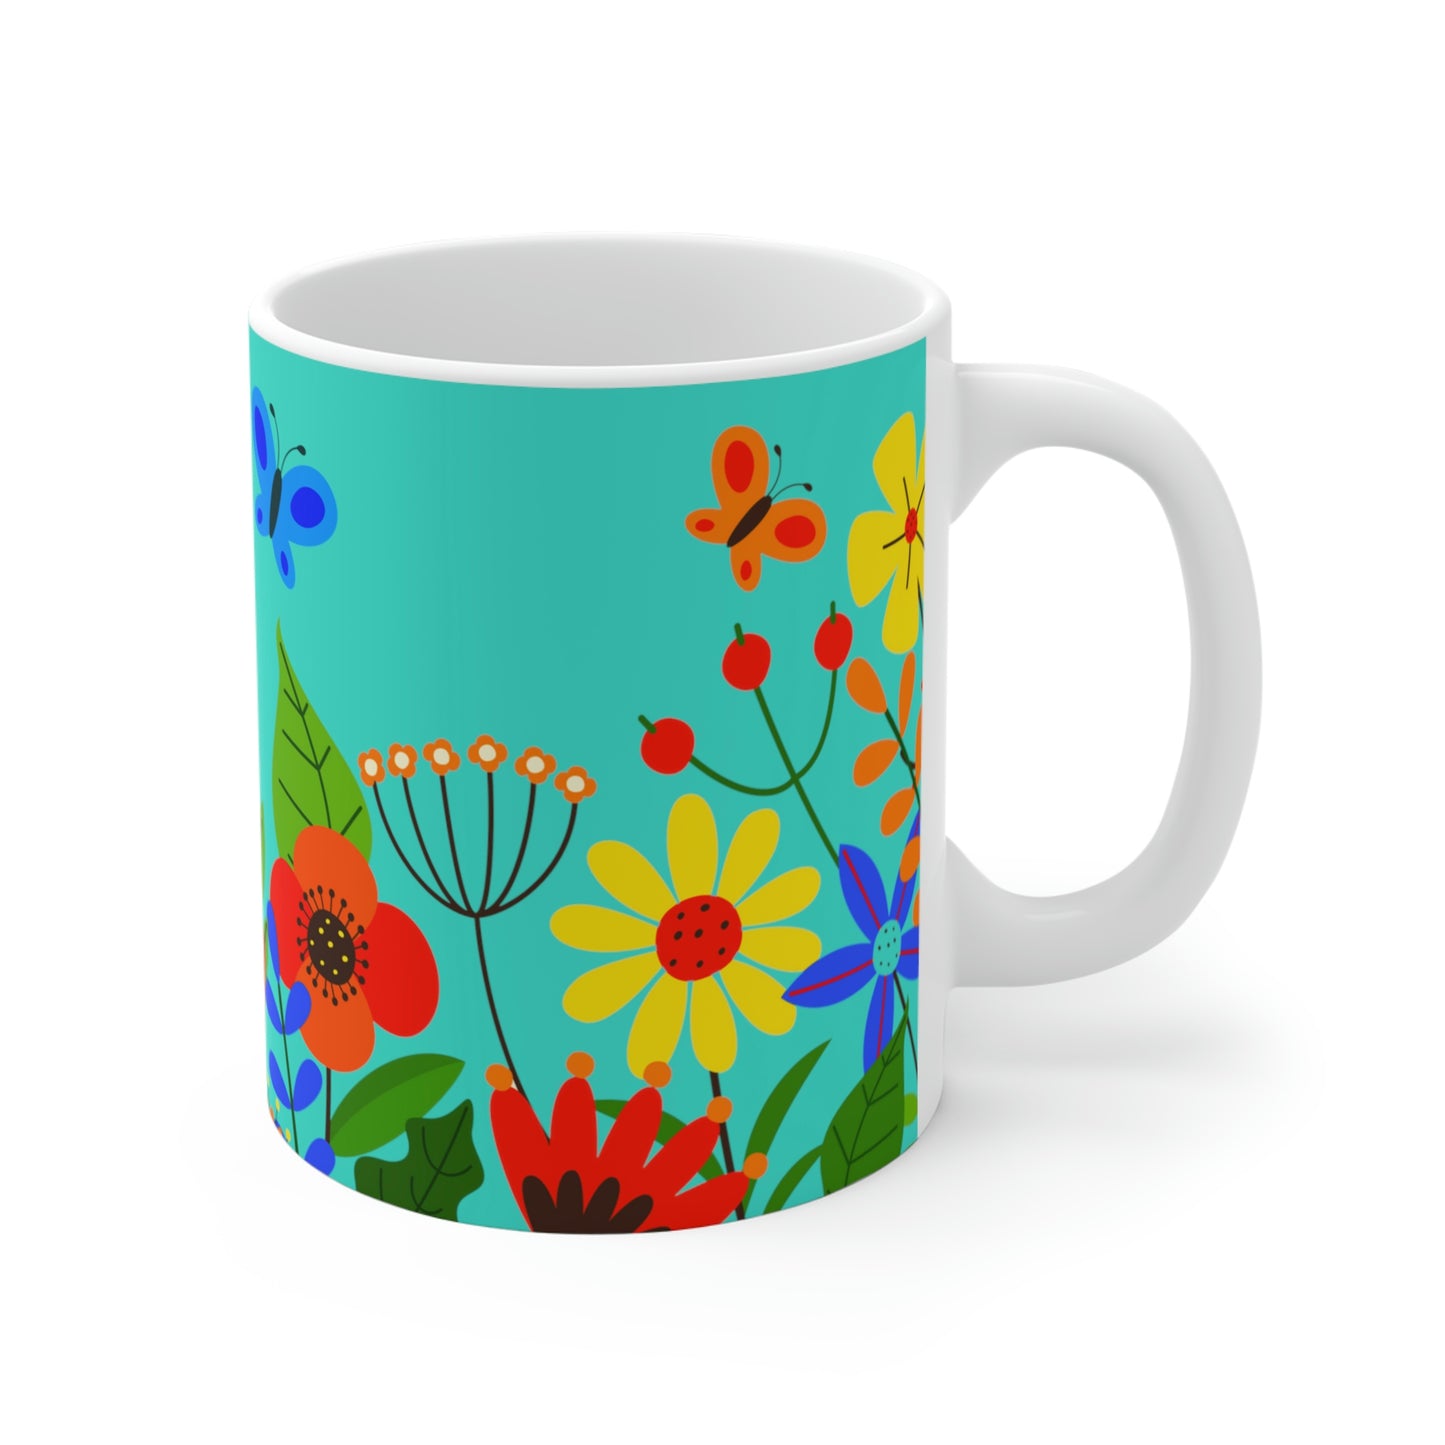 Bright Summer flowers - Turquoise 40e0d0 - Mug 11oz